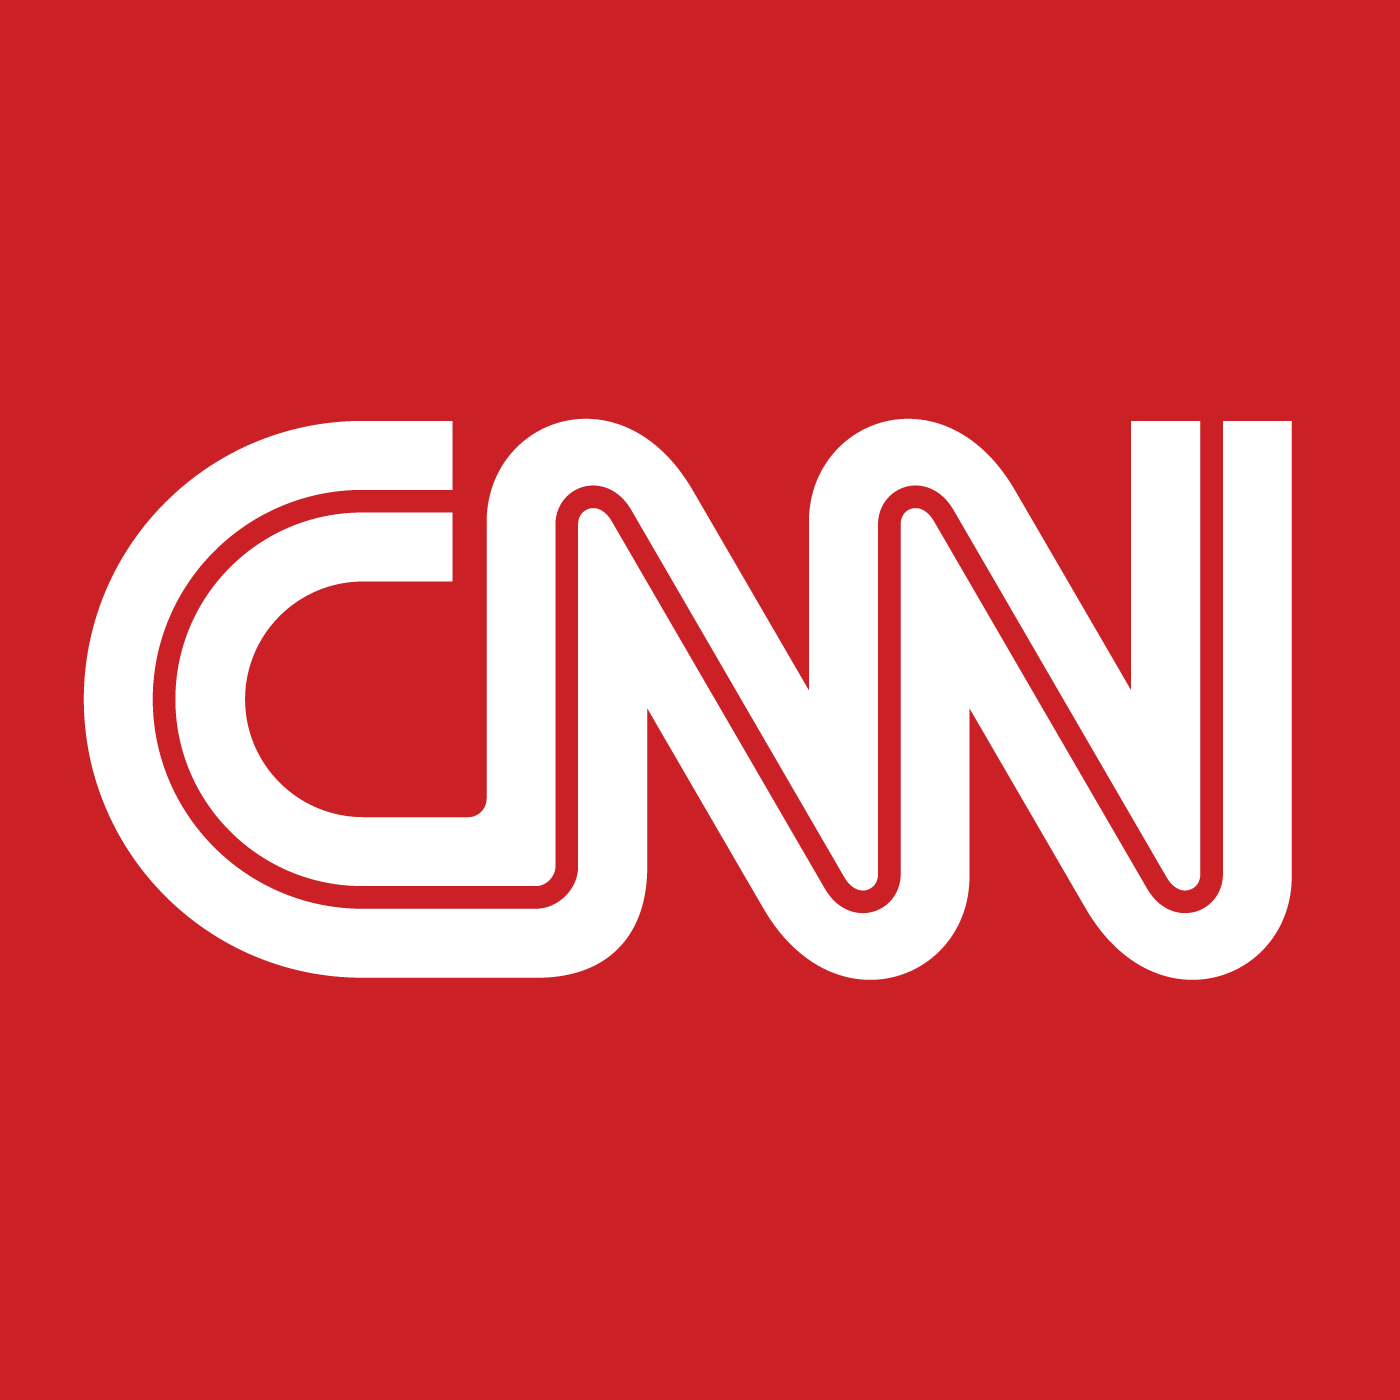 High Quality Clinton News Network (CNN logo) Blank Meme Template